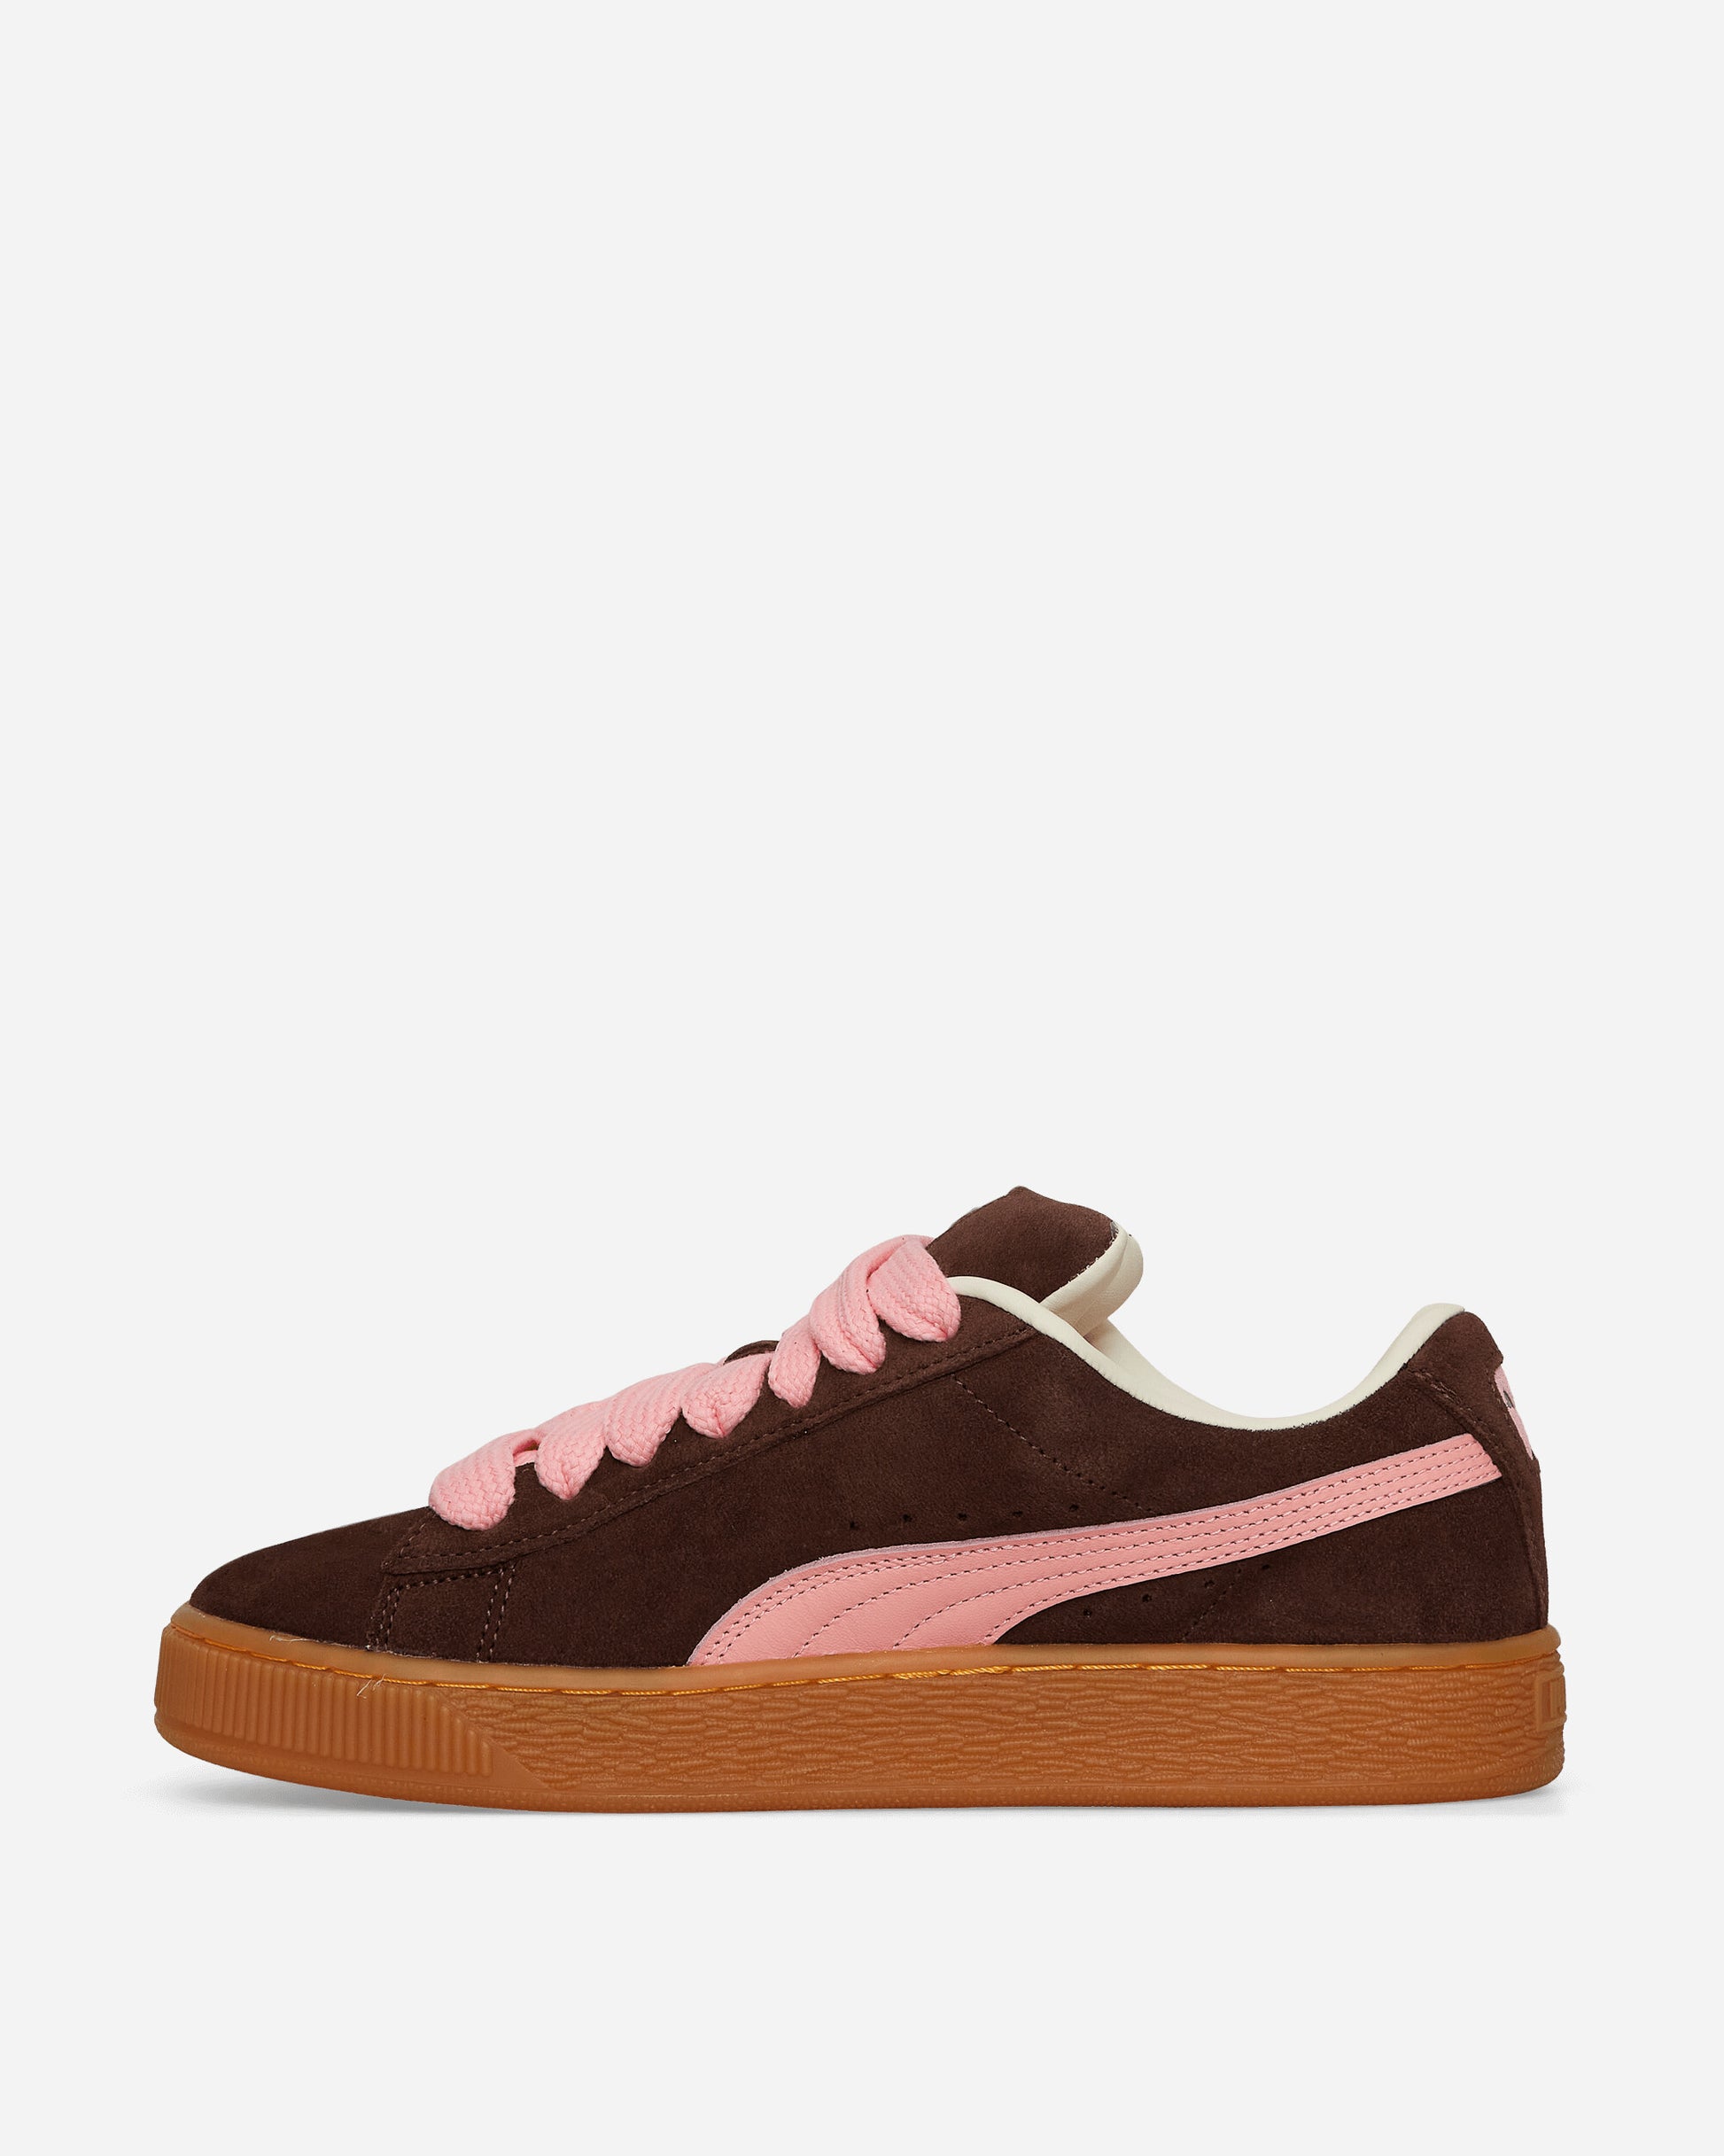 Puma Suede Xl Brown/Pink Sneakers Low 397648-14